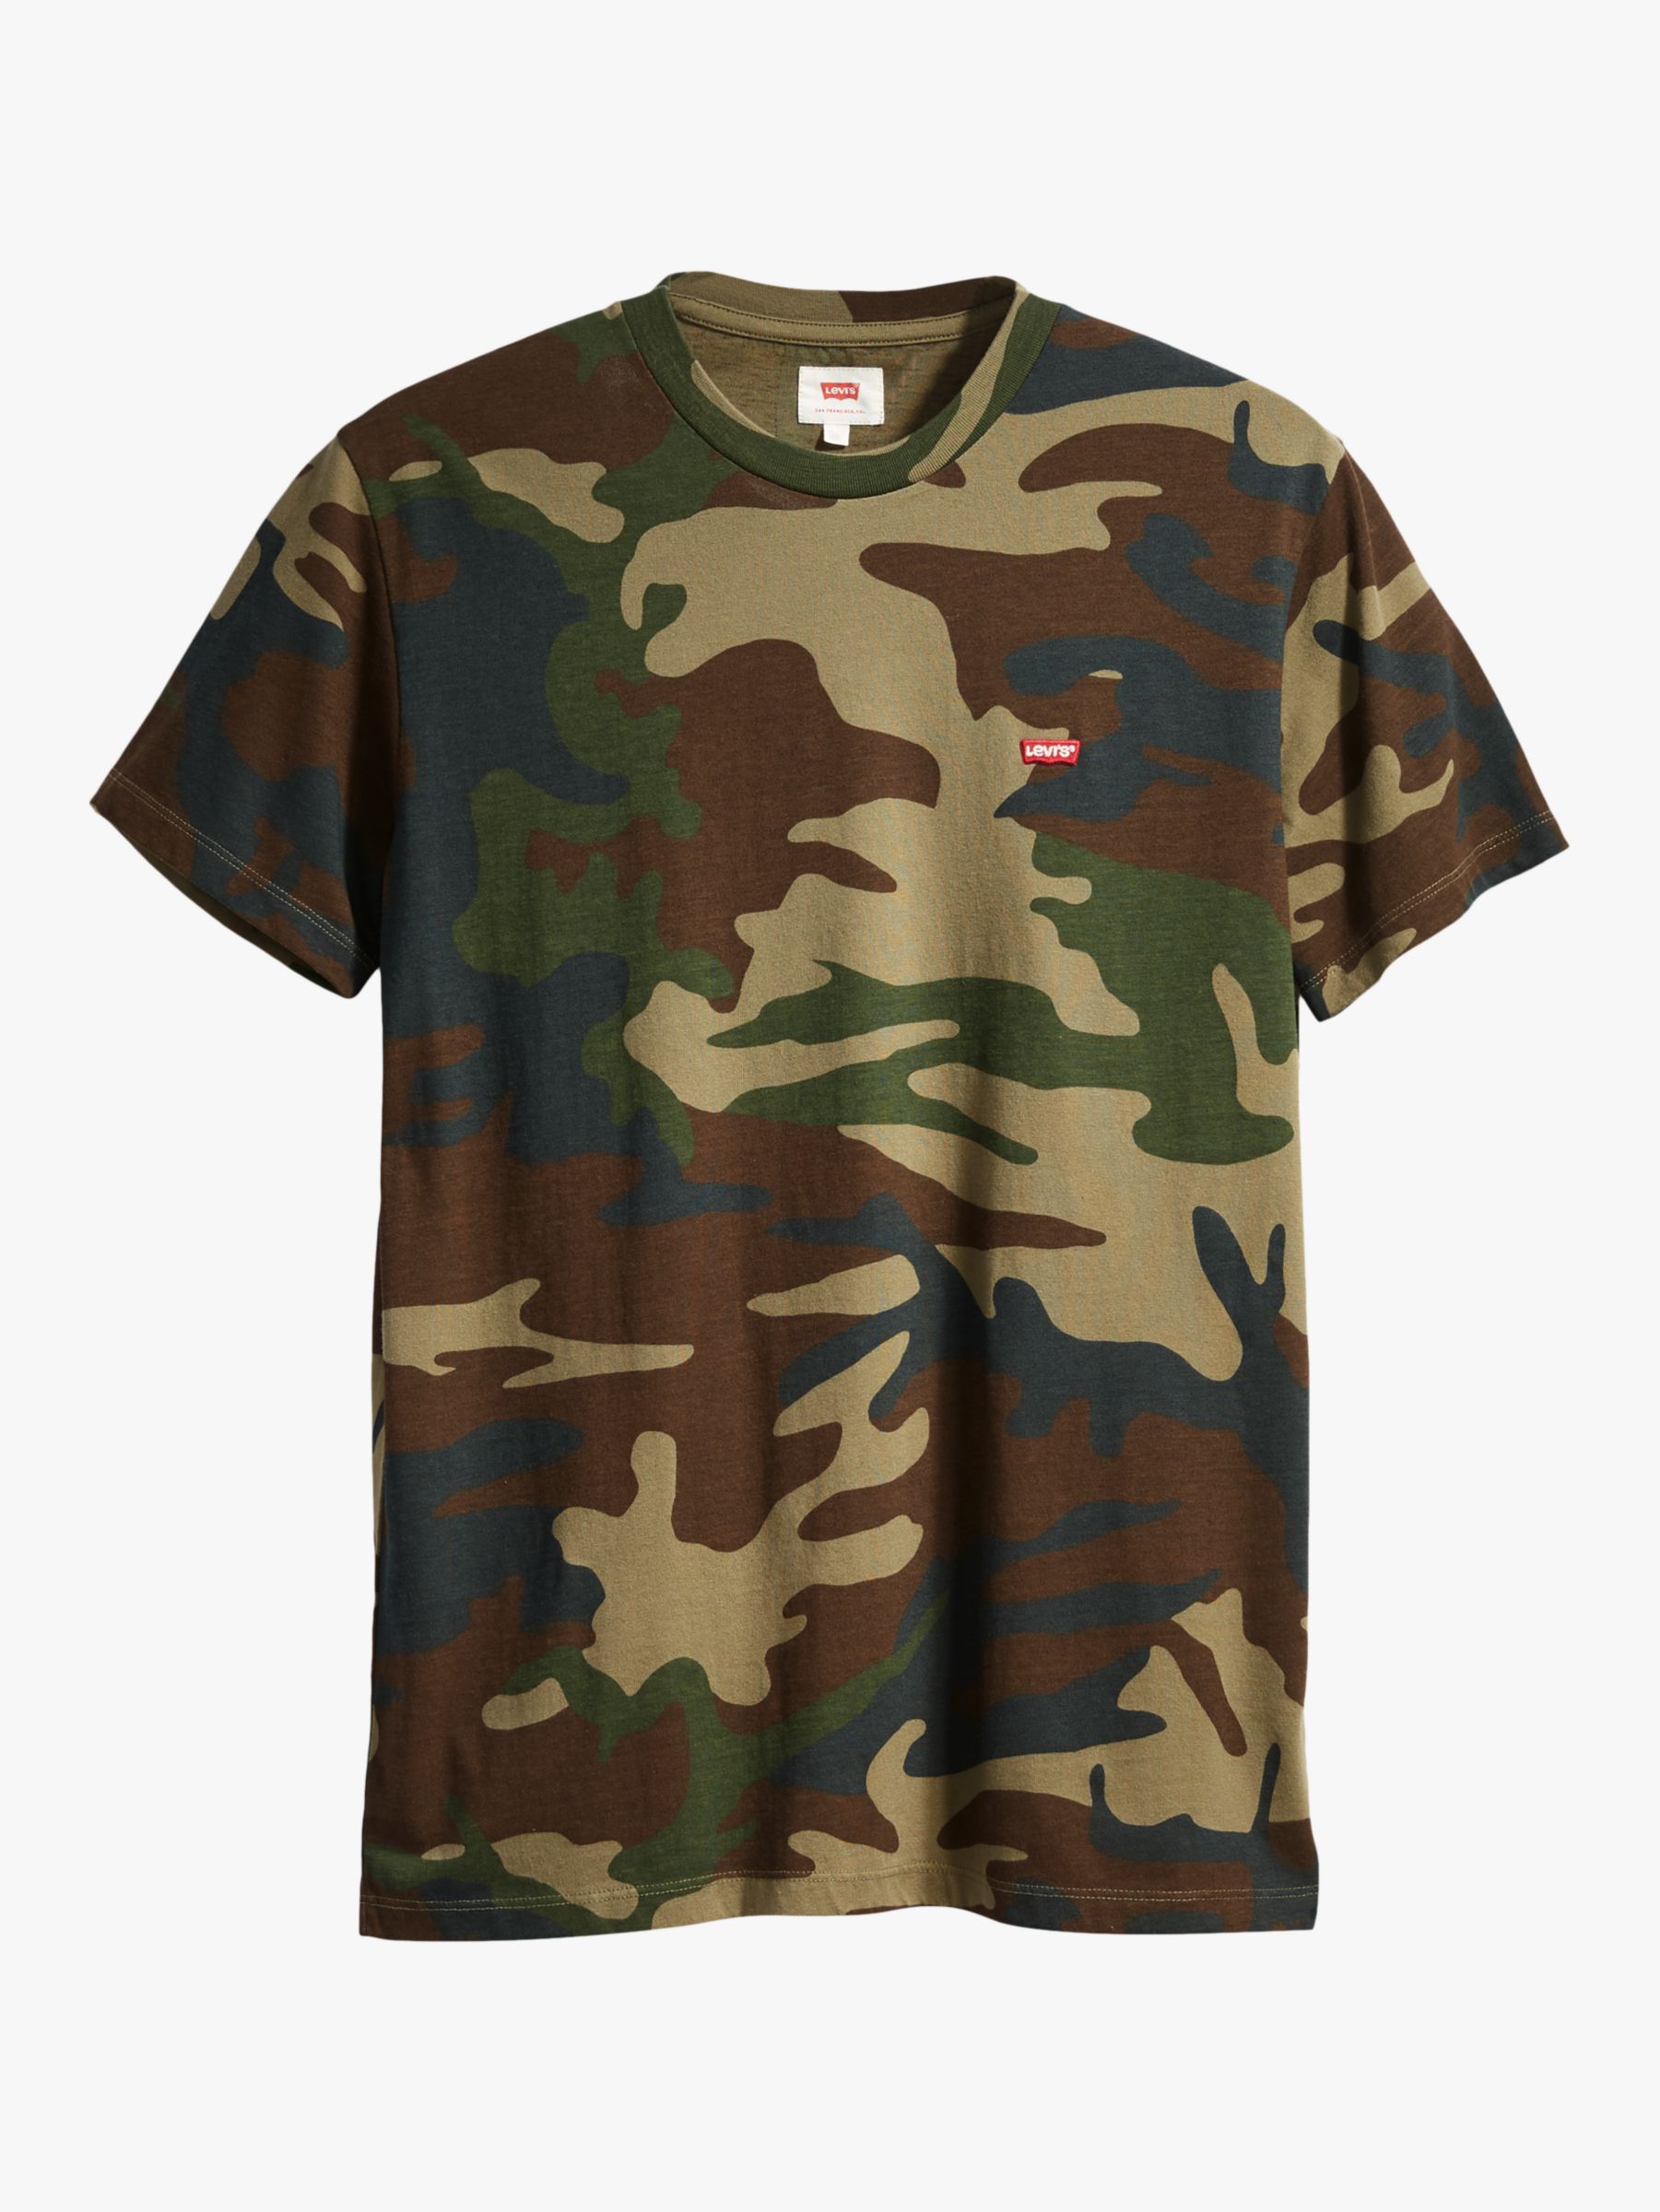 levi's camouflage t shirt